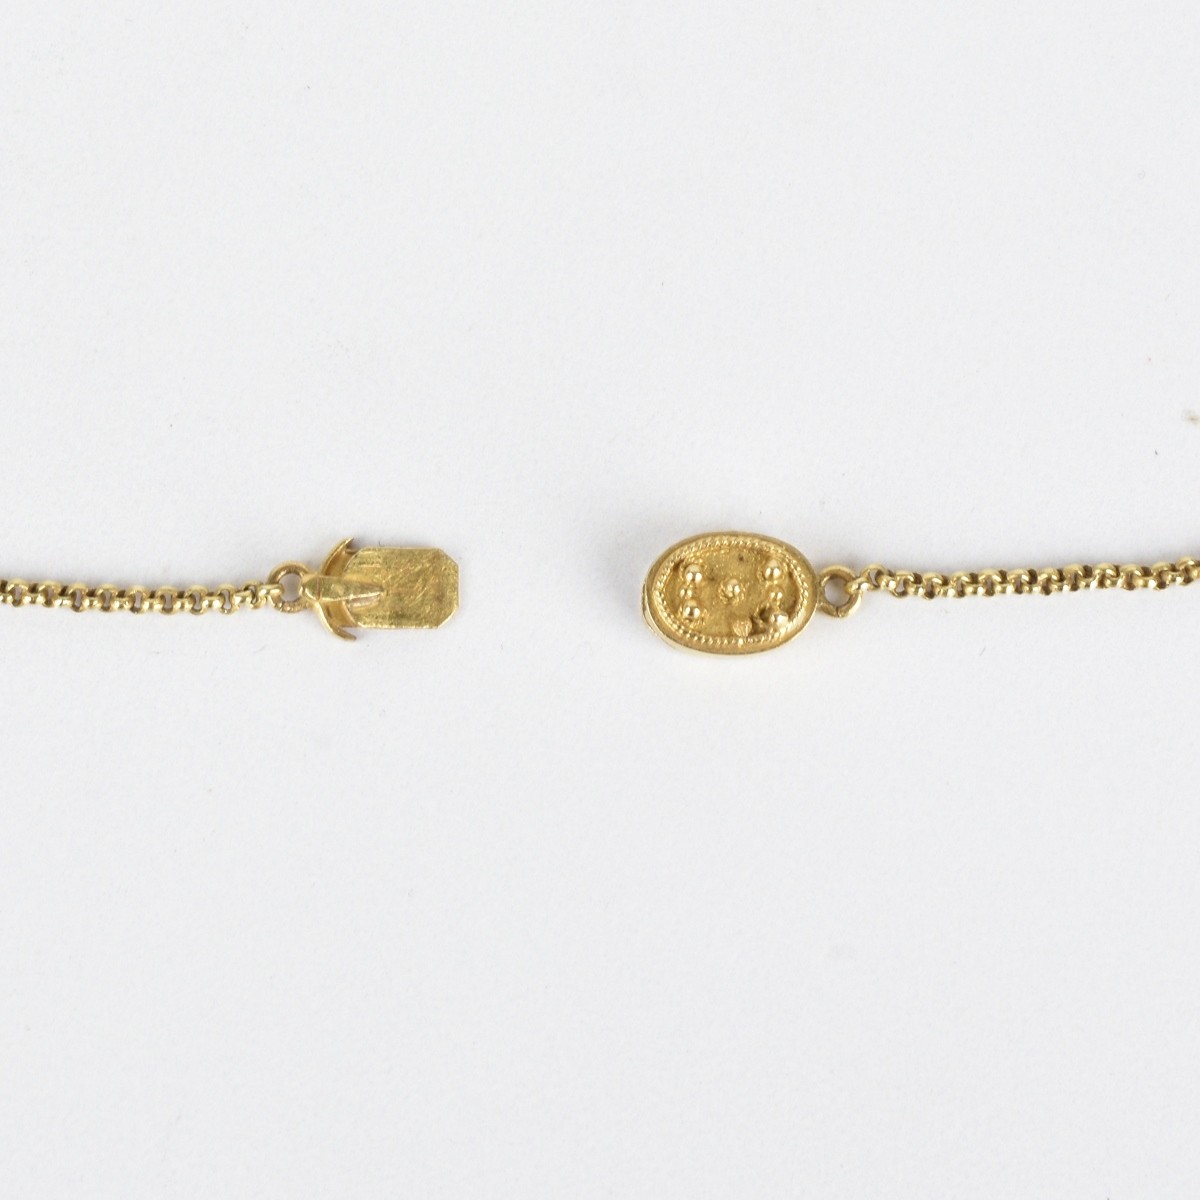 Antique Etruscan style 18K Necklace